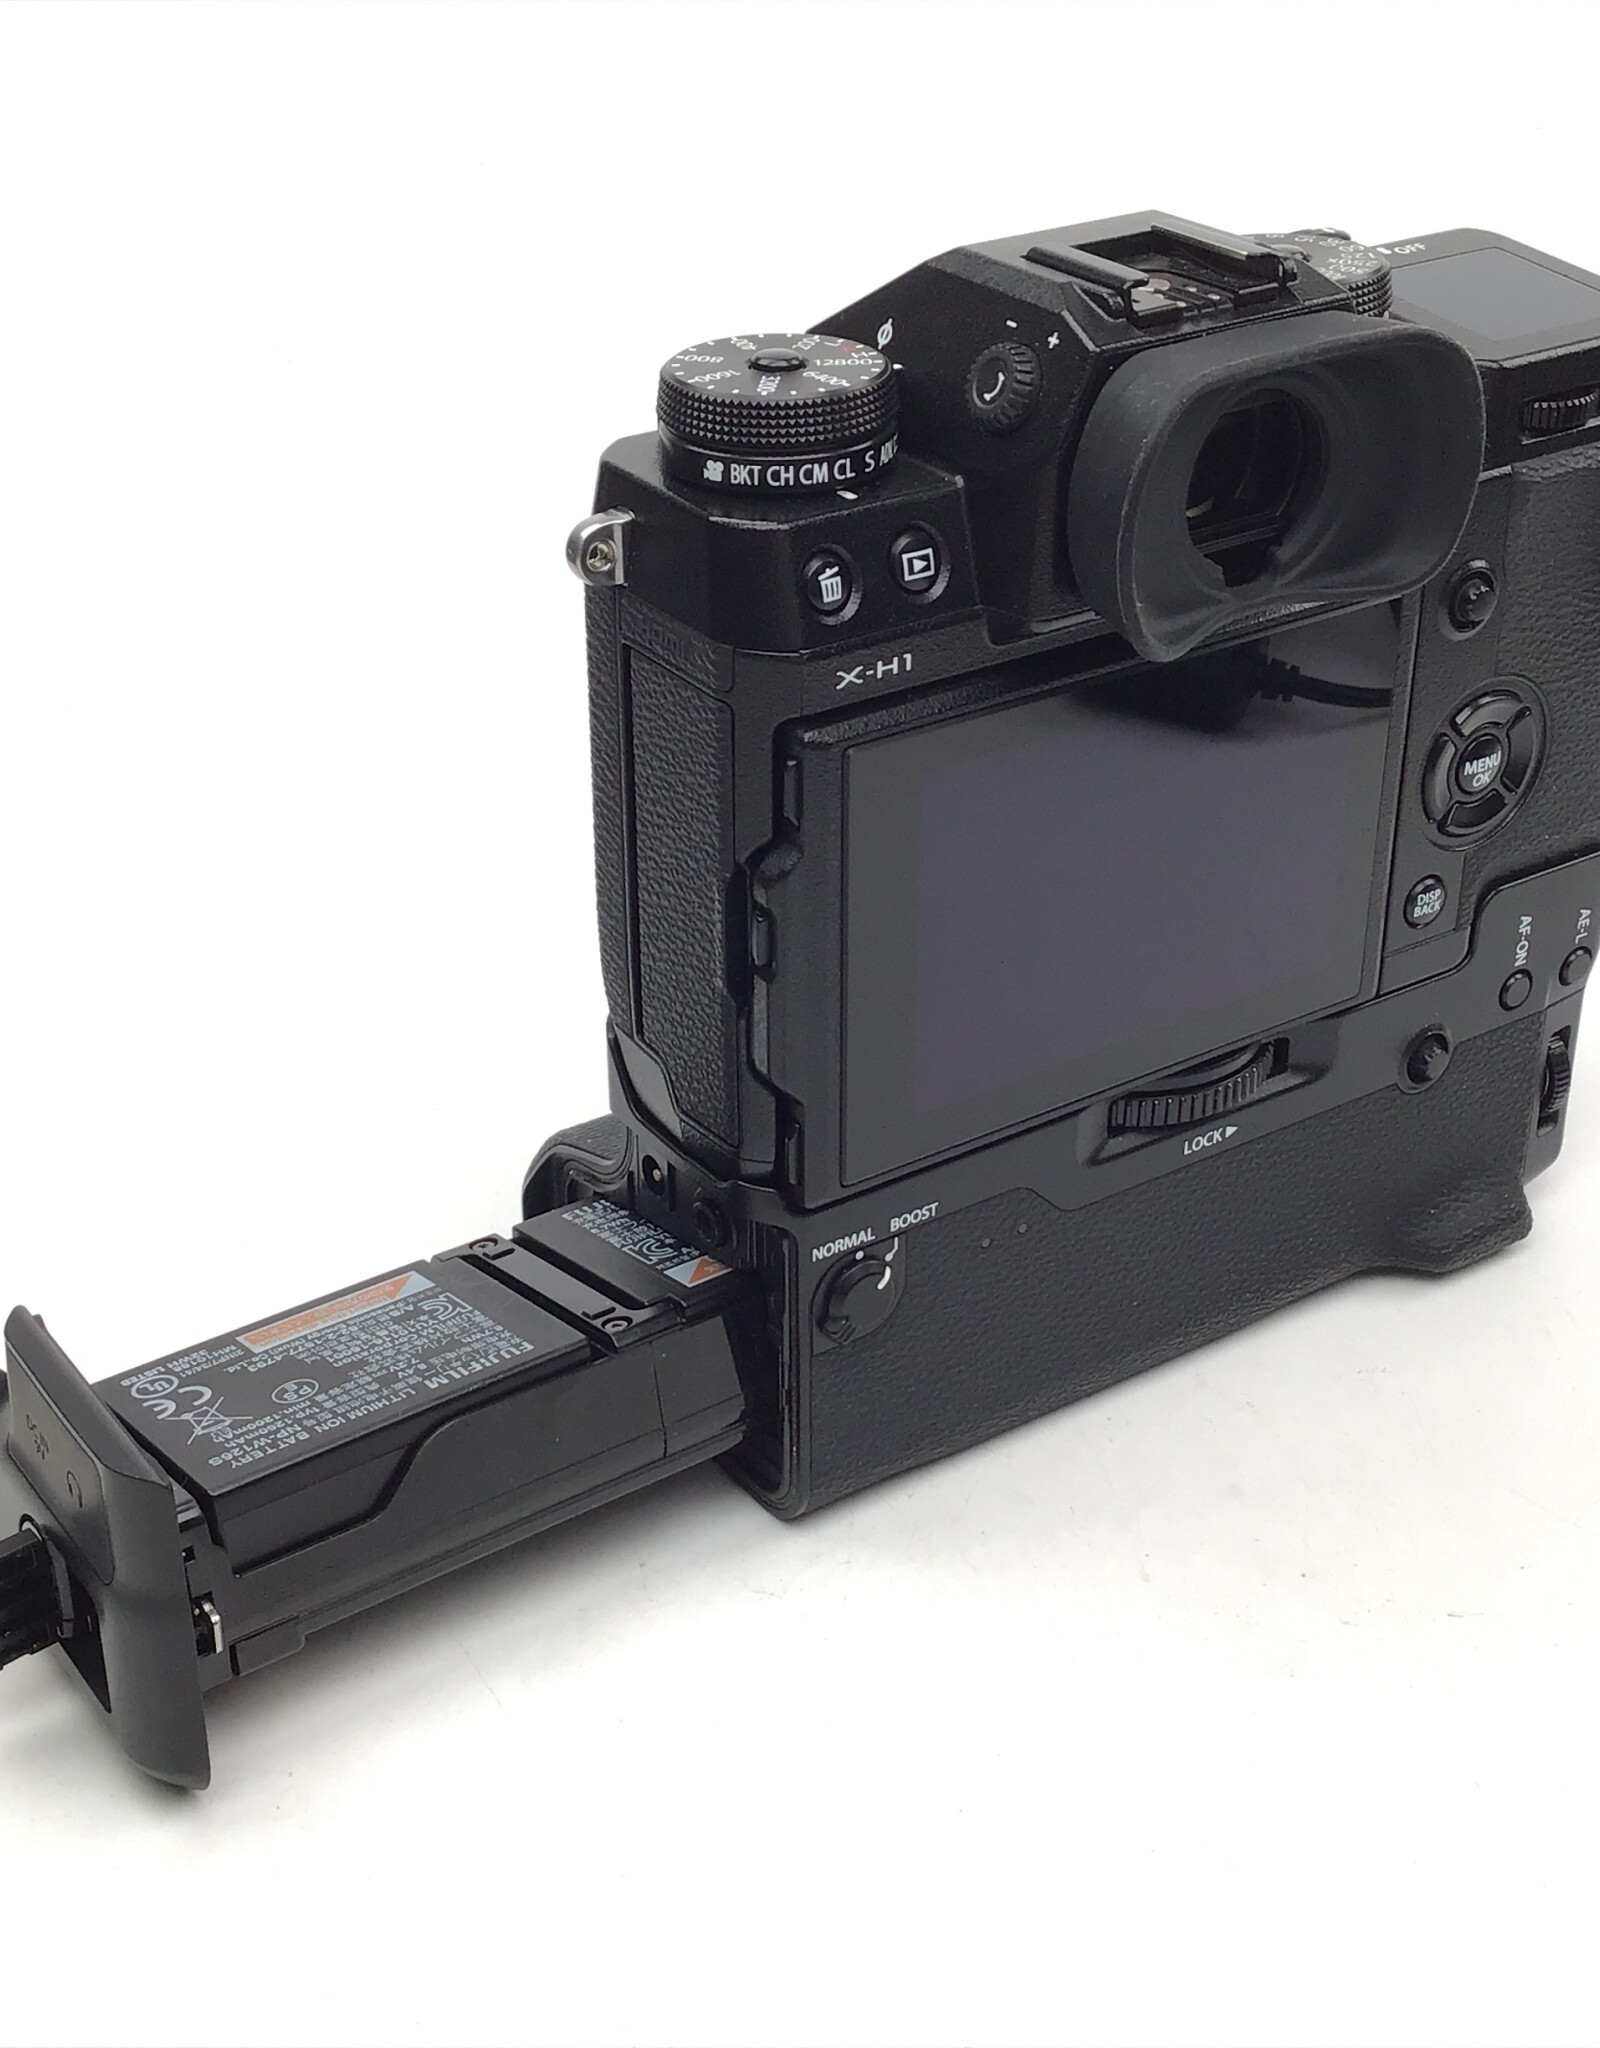 Fujifilm Fuji X-H1 Camera with Booster Grip VPB-XH1 Used Good